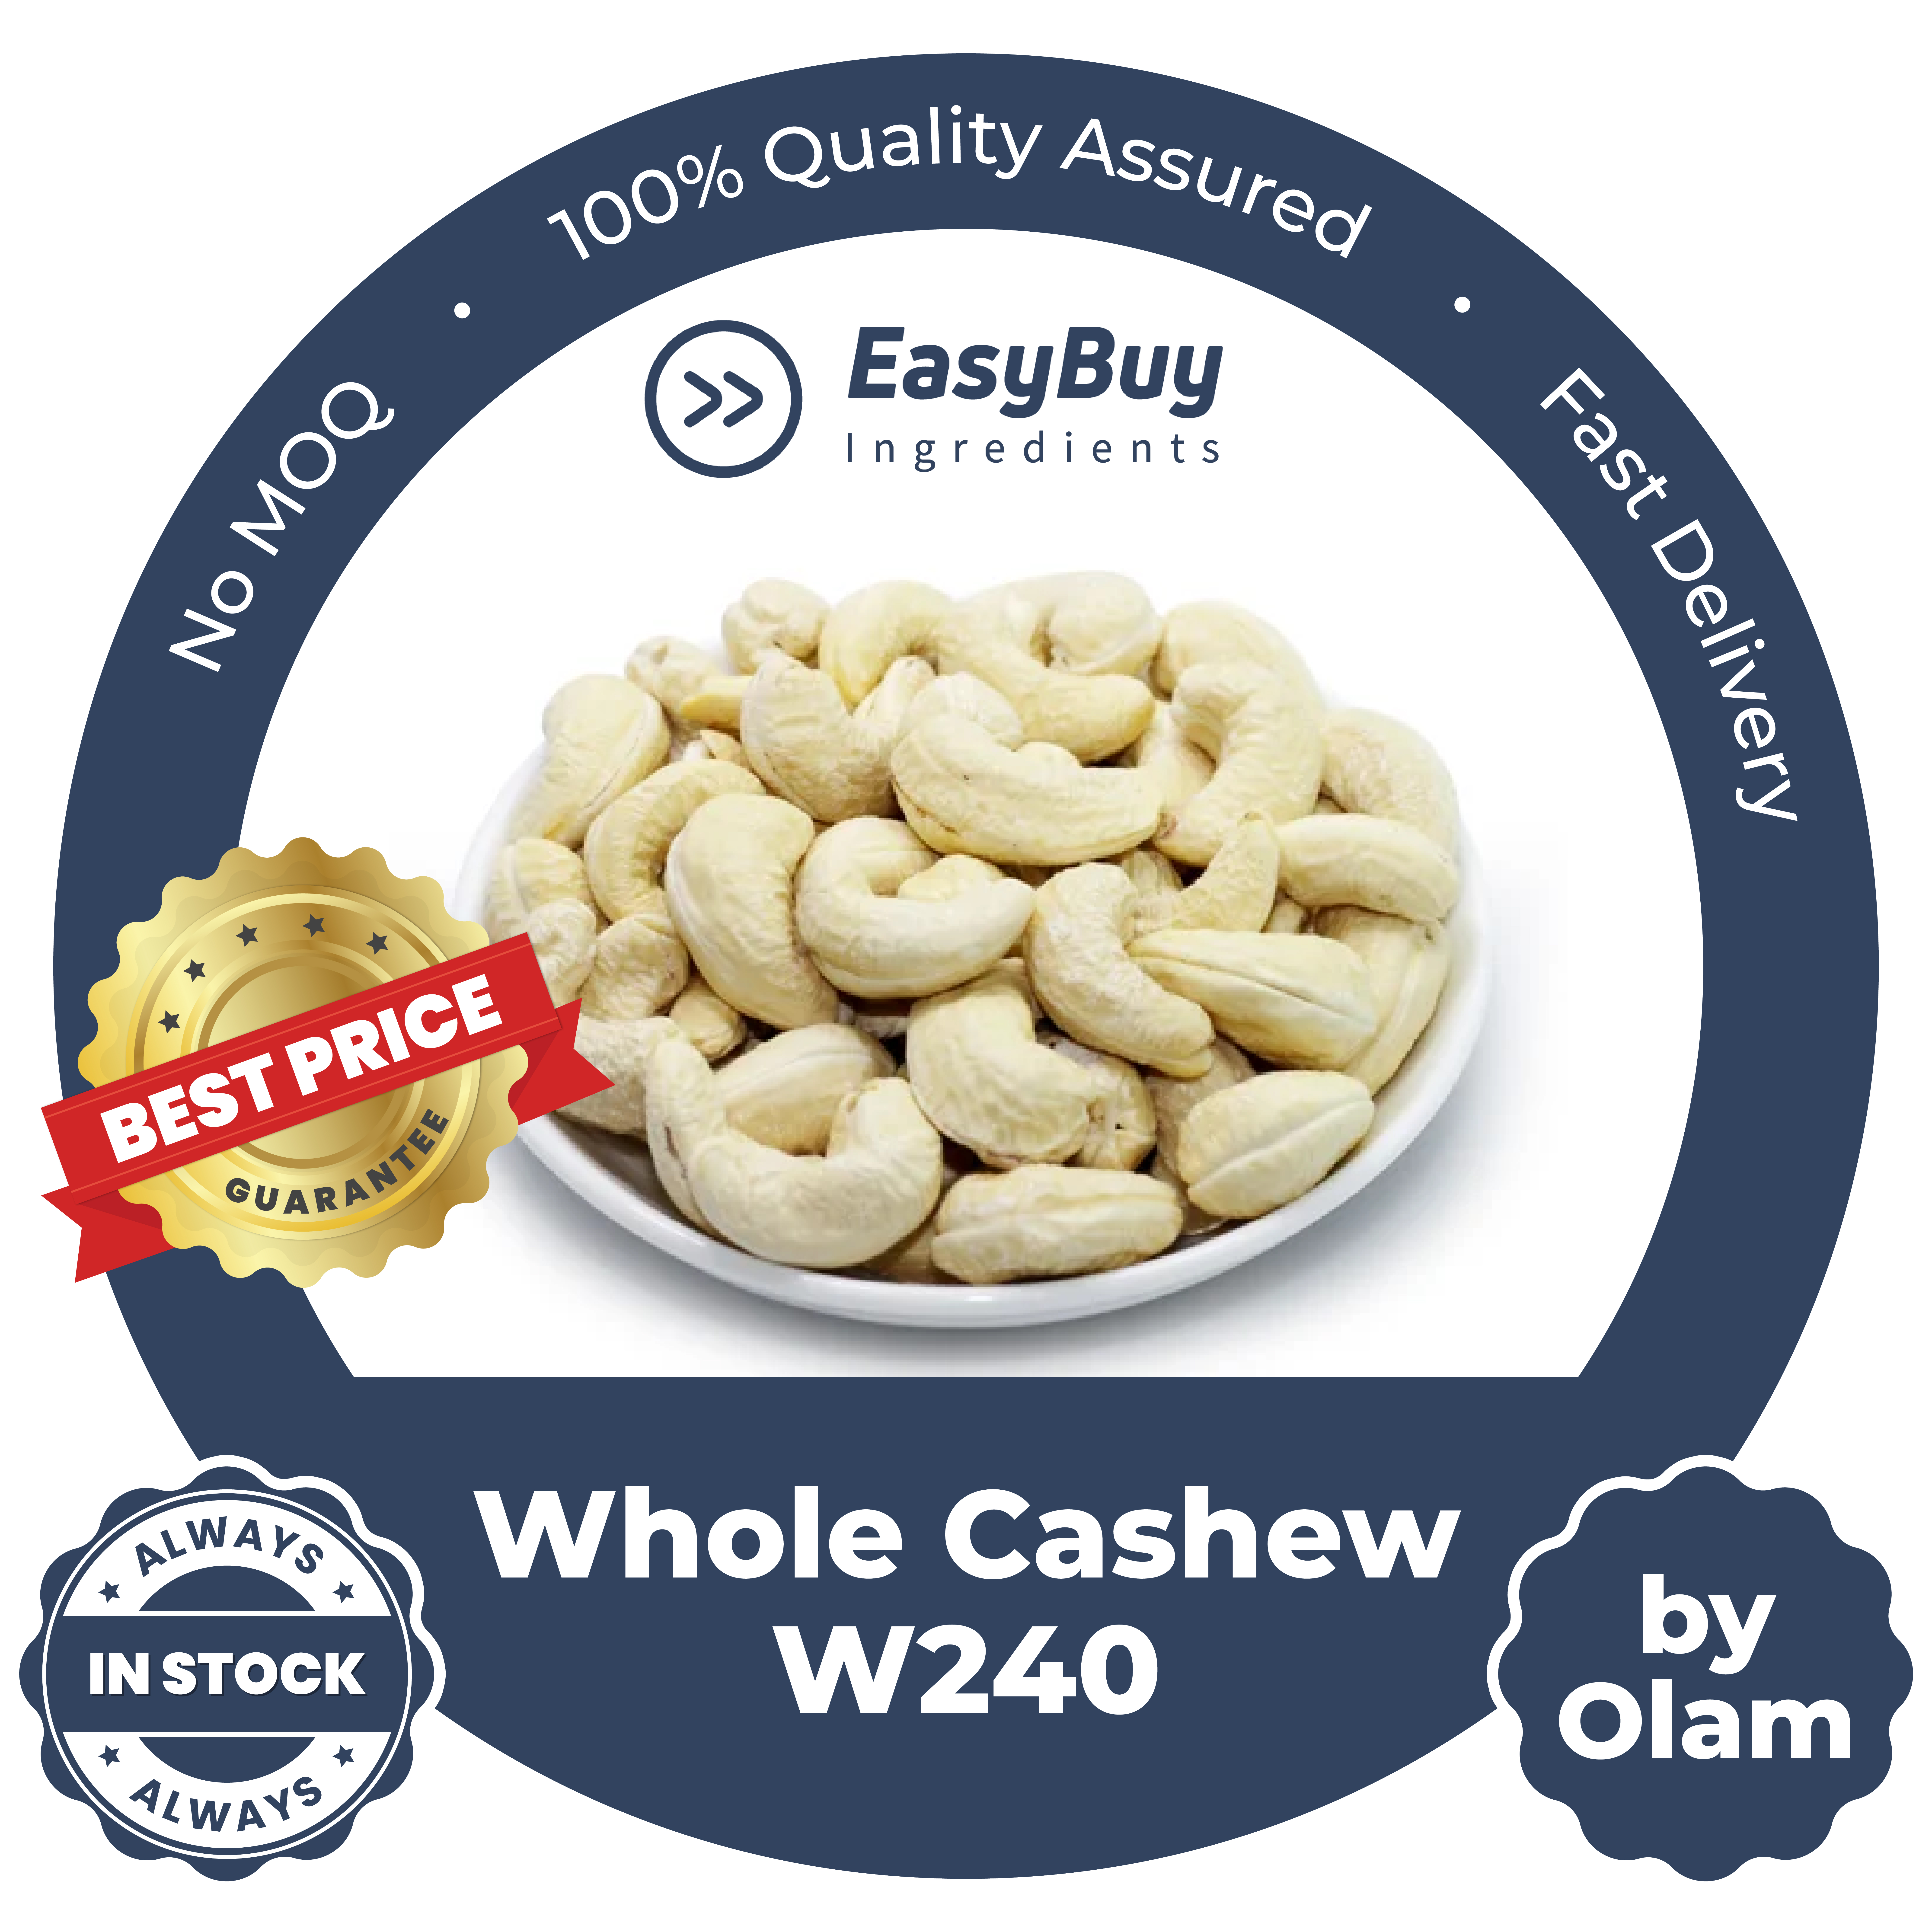 Whole Cashew W240 by Olam